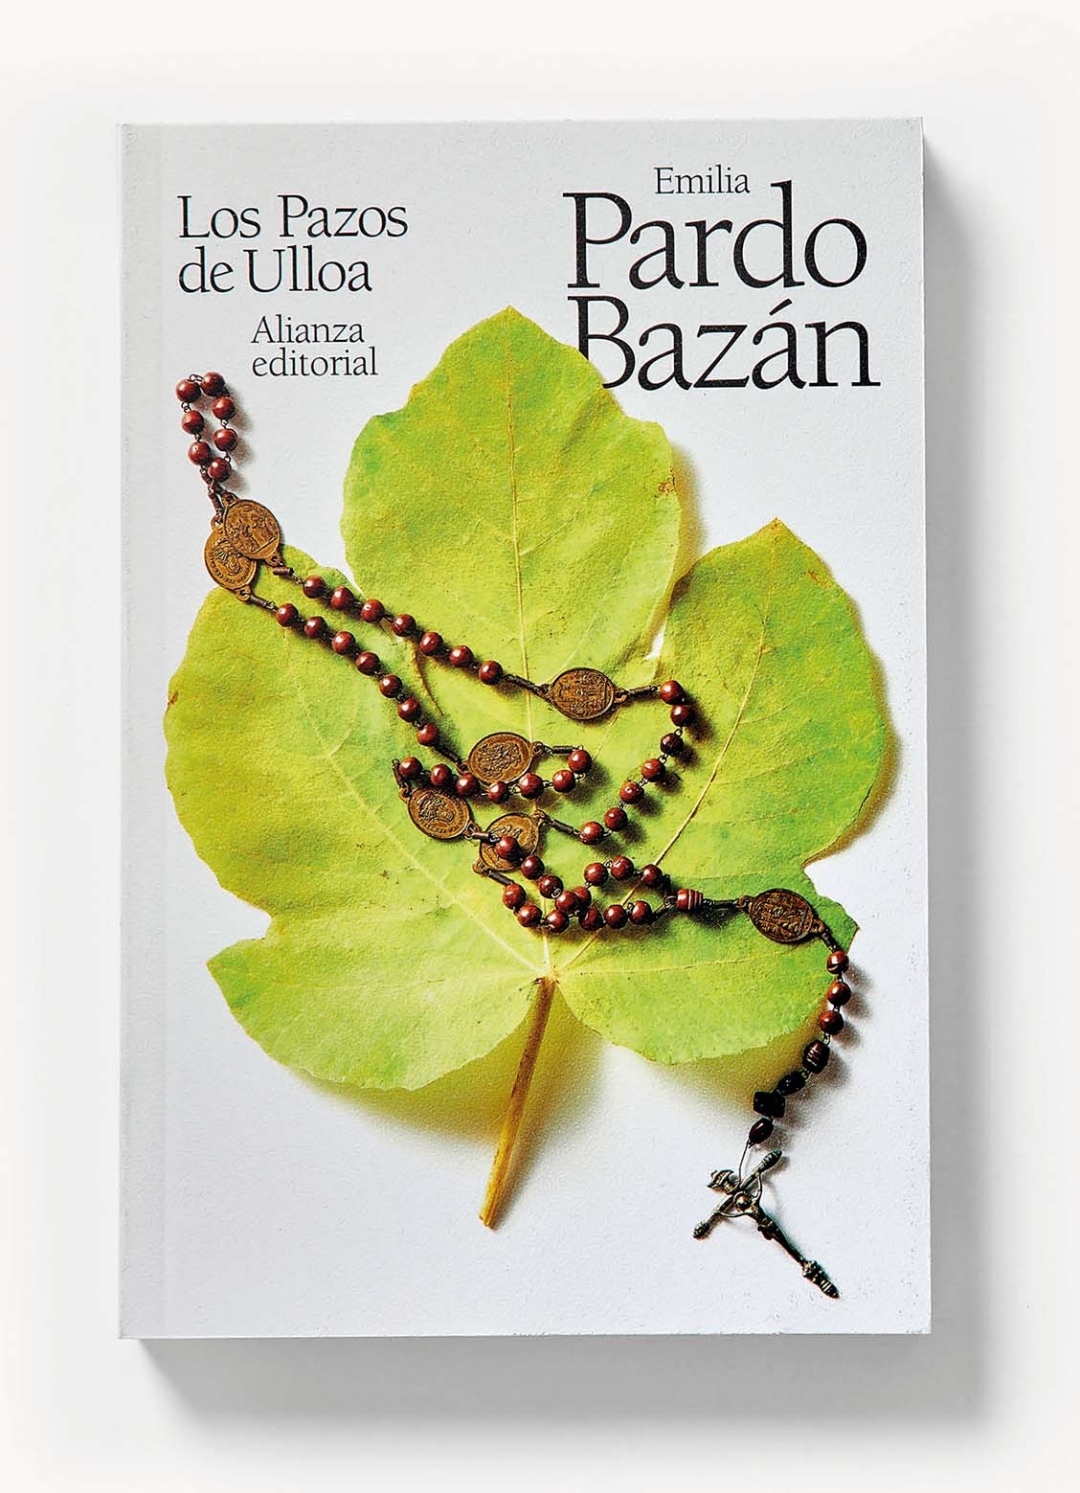 The cover of ‘Los pazos de Ulloa’ (The House of Ulloa) created by Manuel Estrada for Alianza Editorial